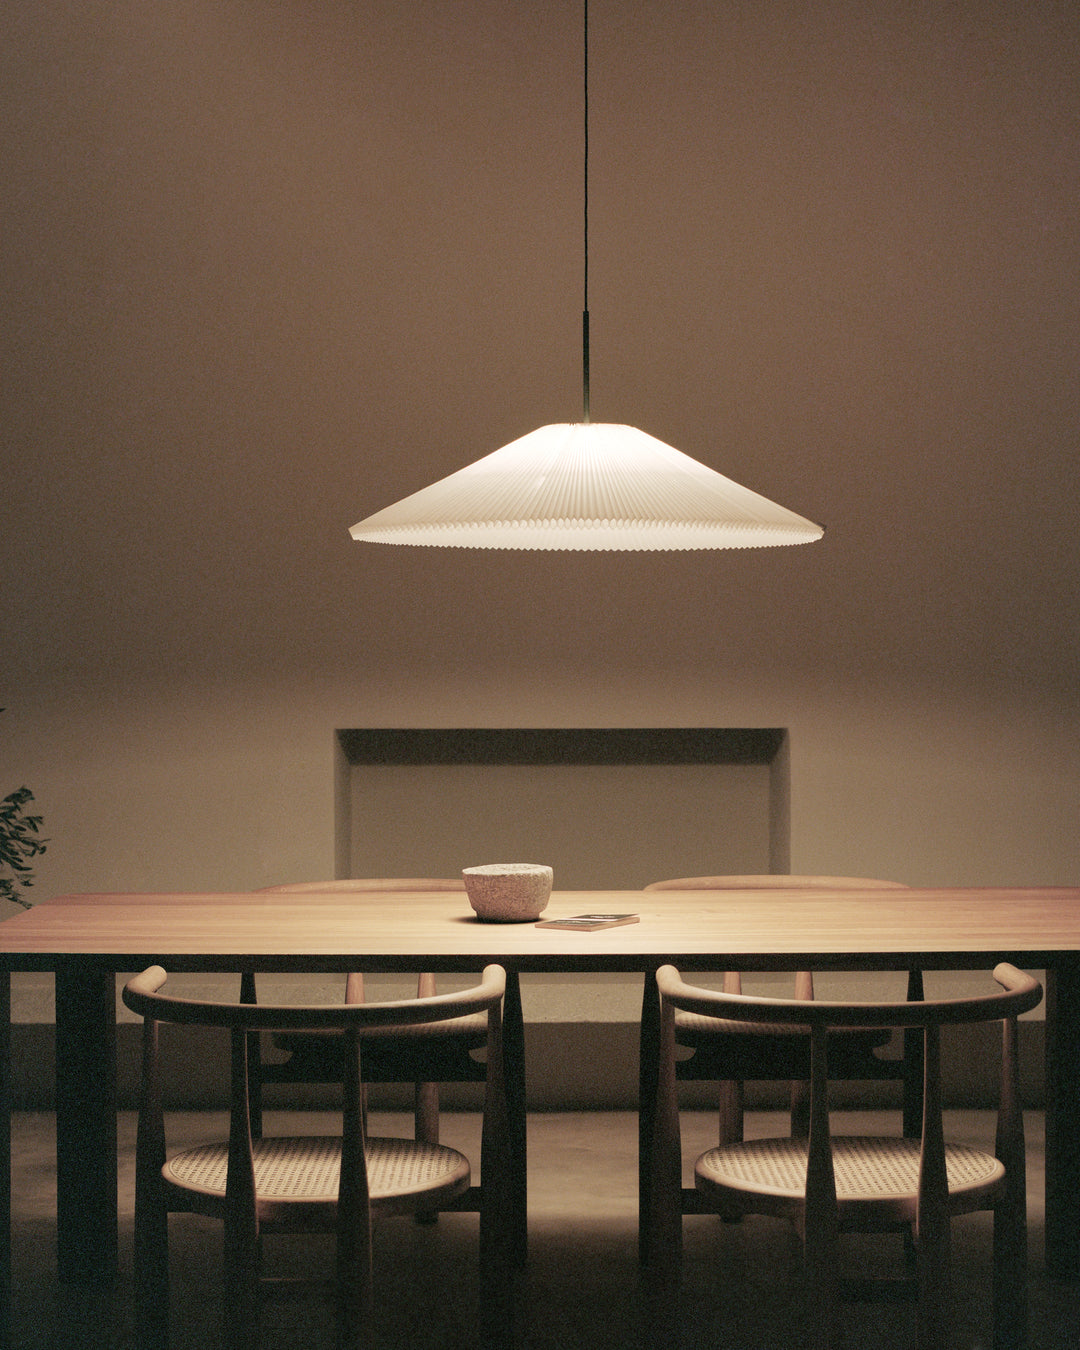 Nebra Pendant Lamp Large above dining table at night